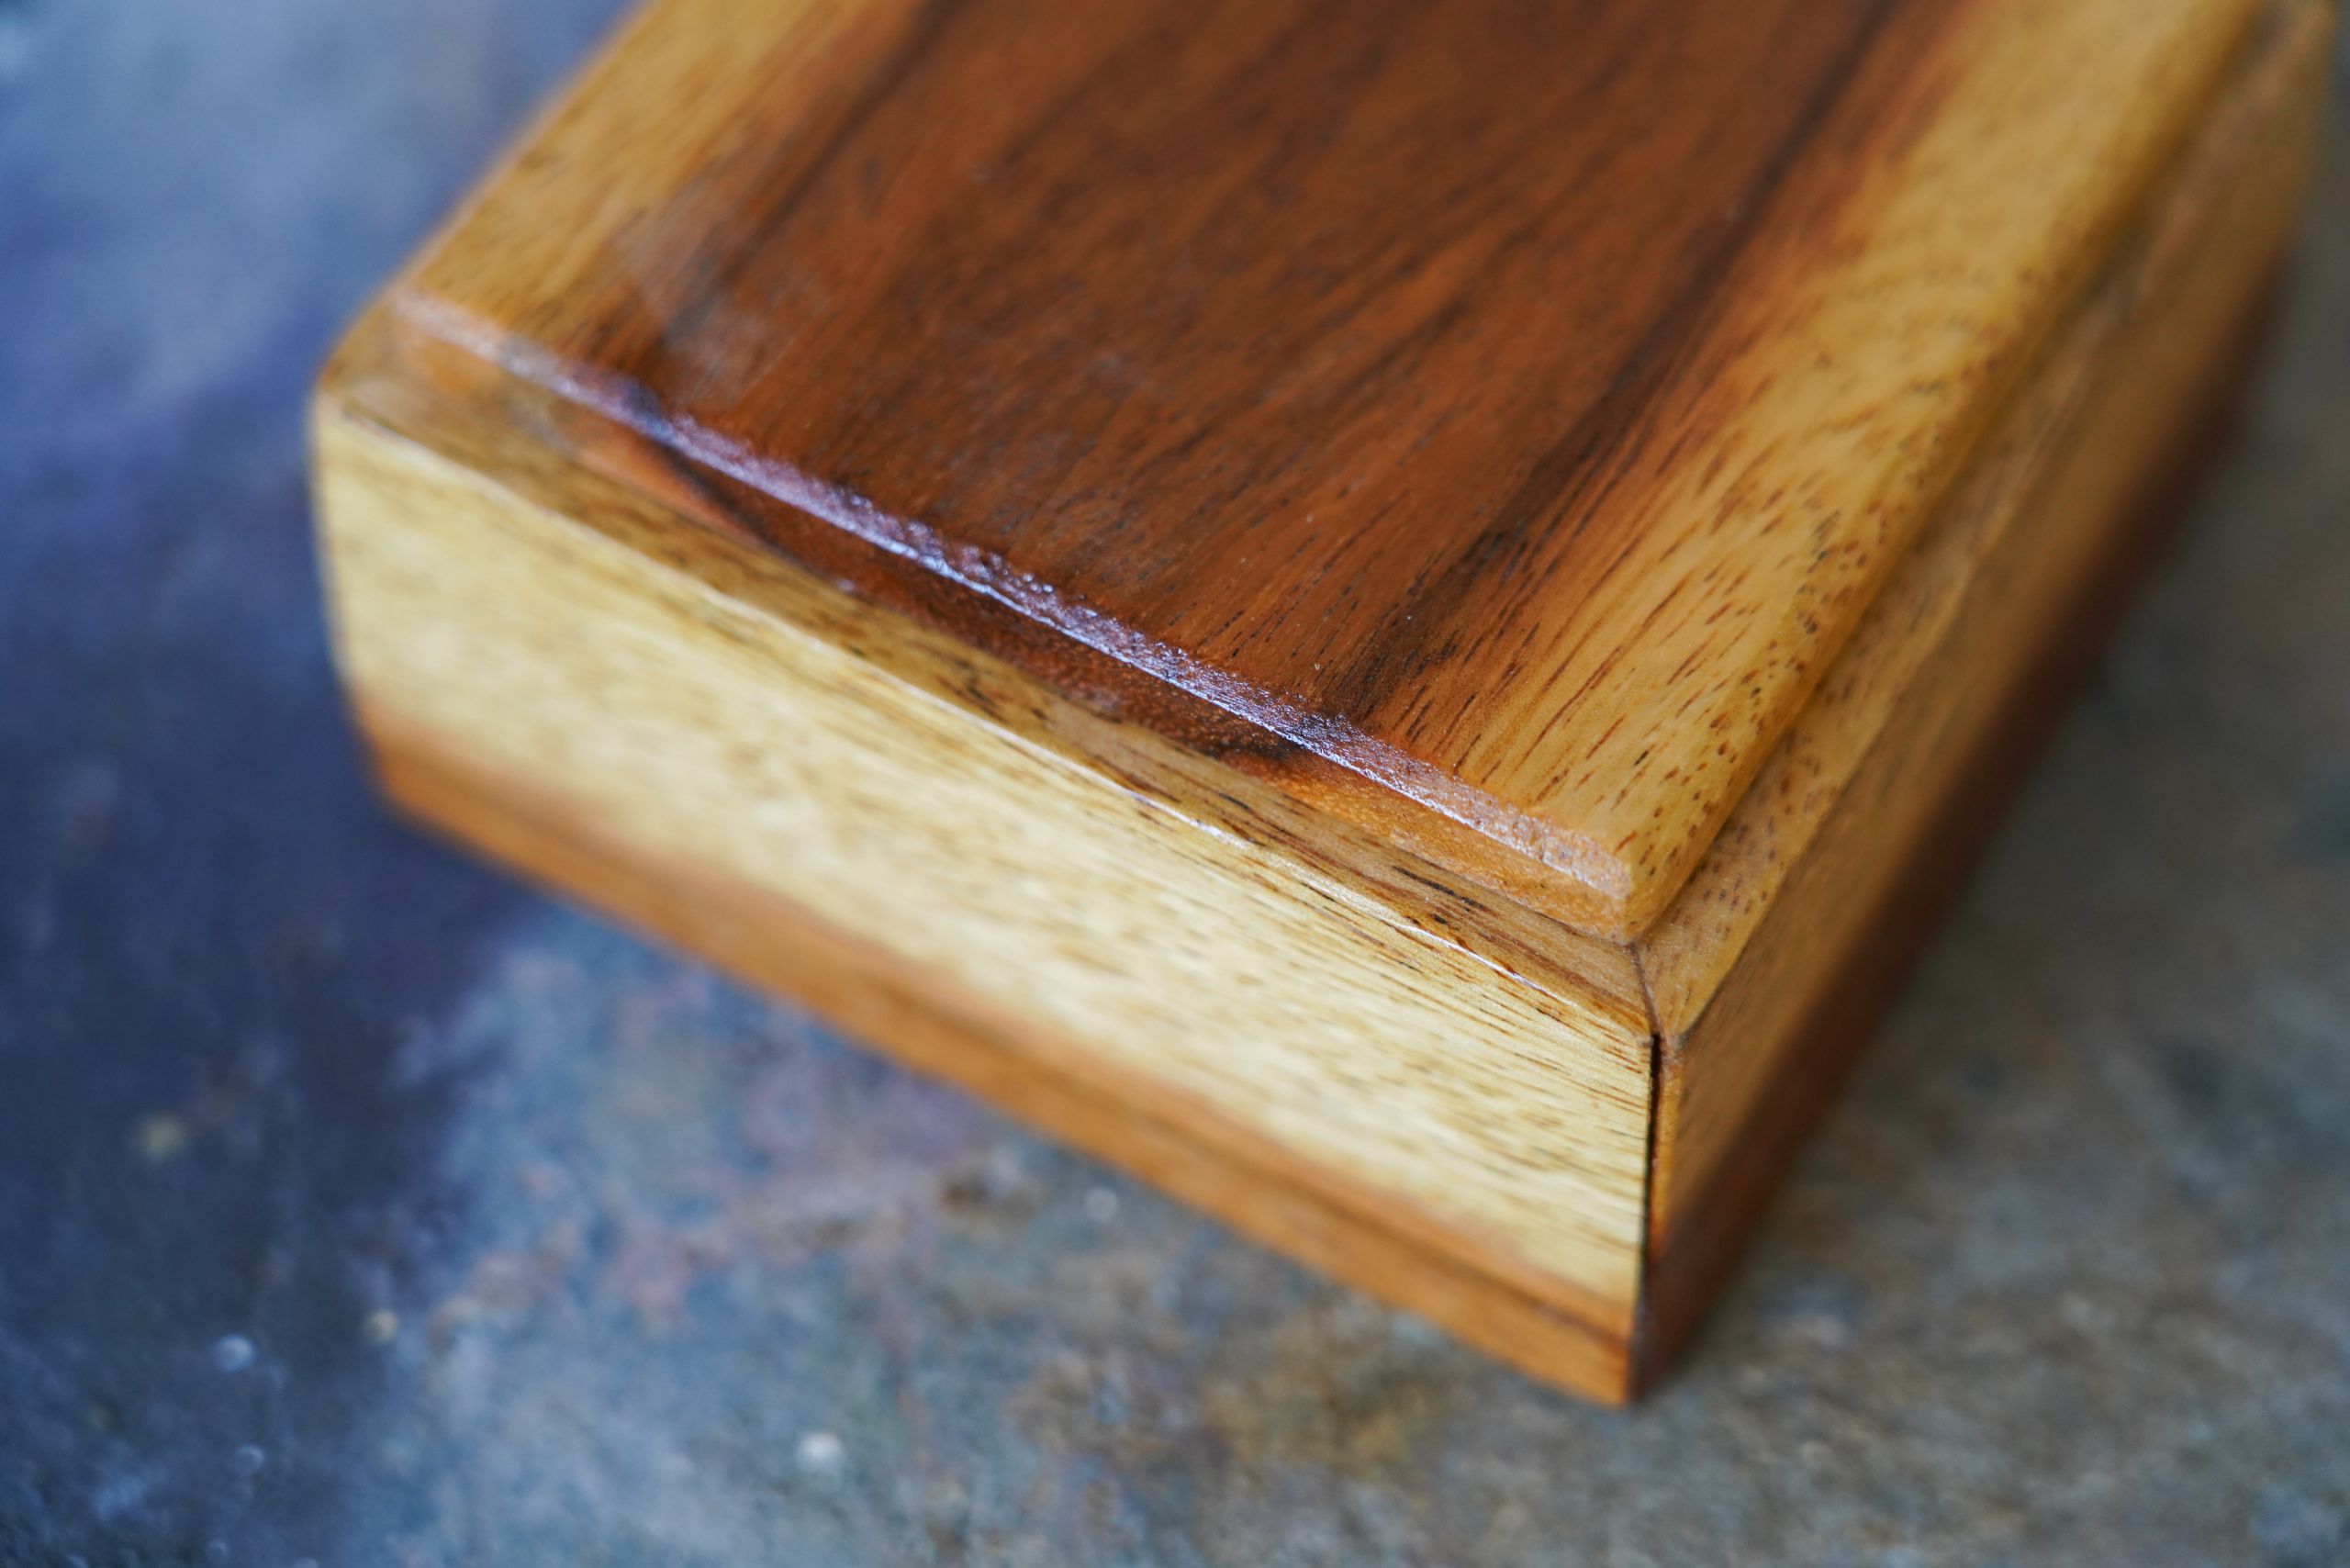 hard glossy finish on wood